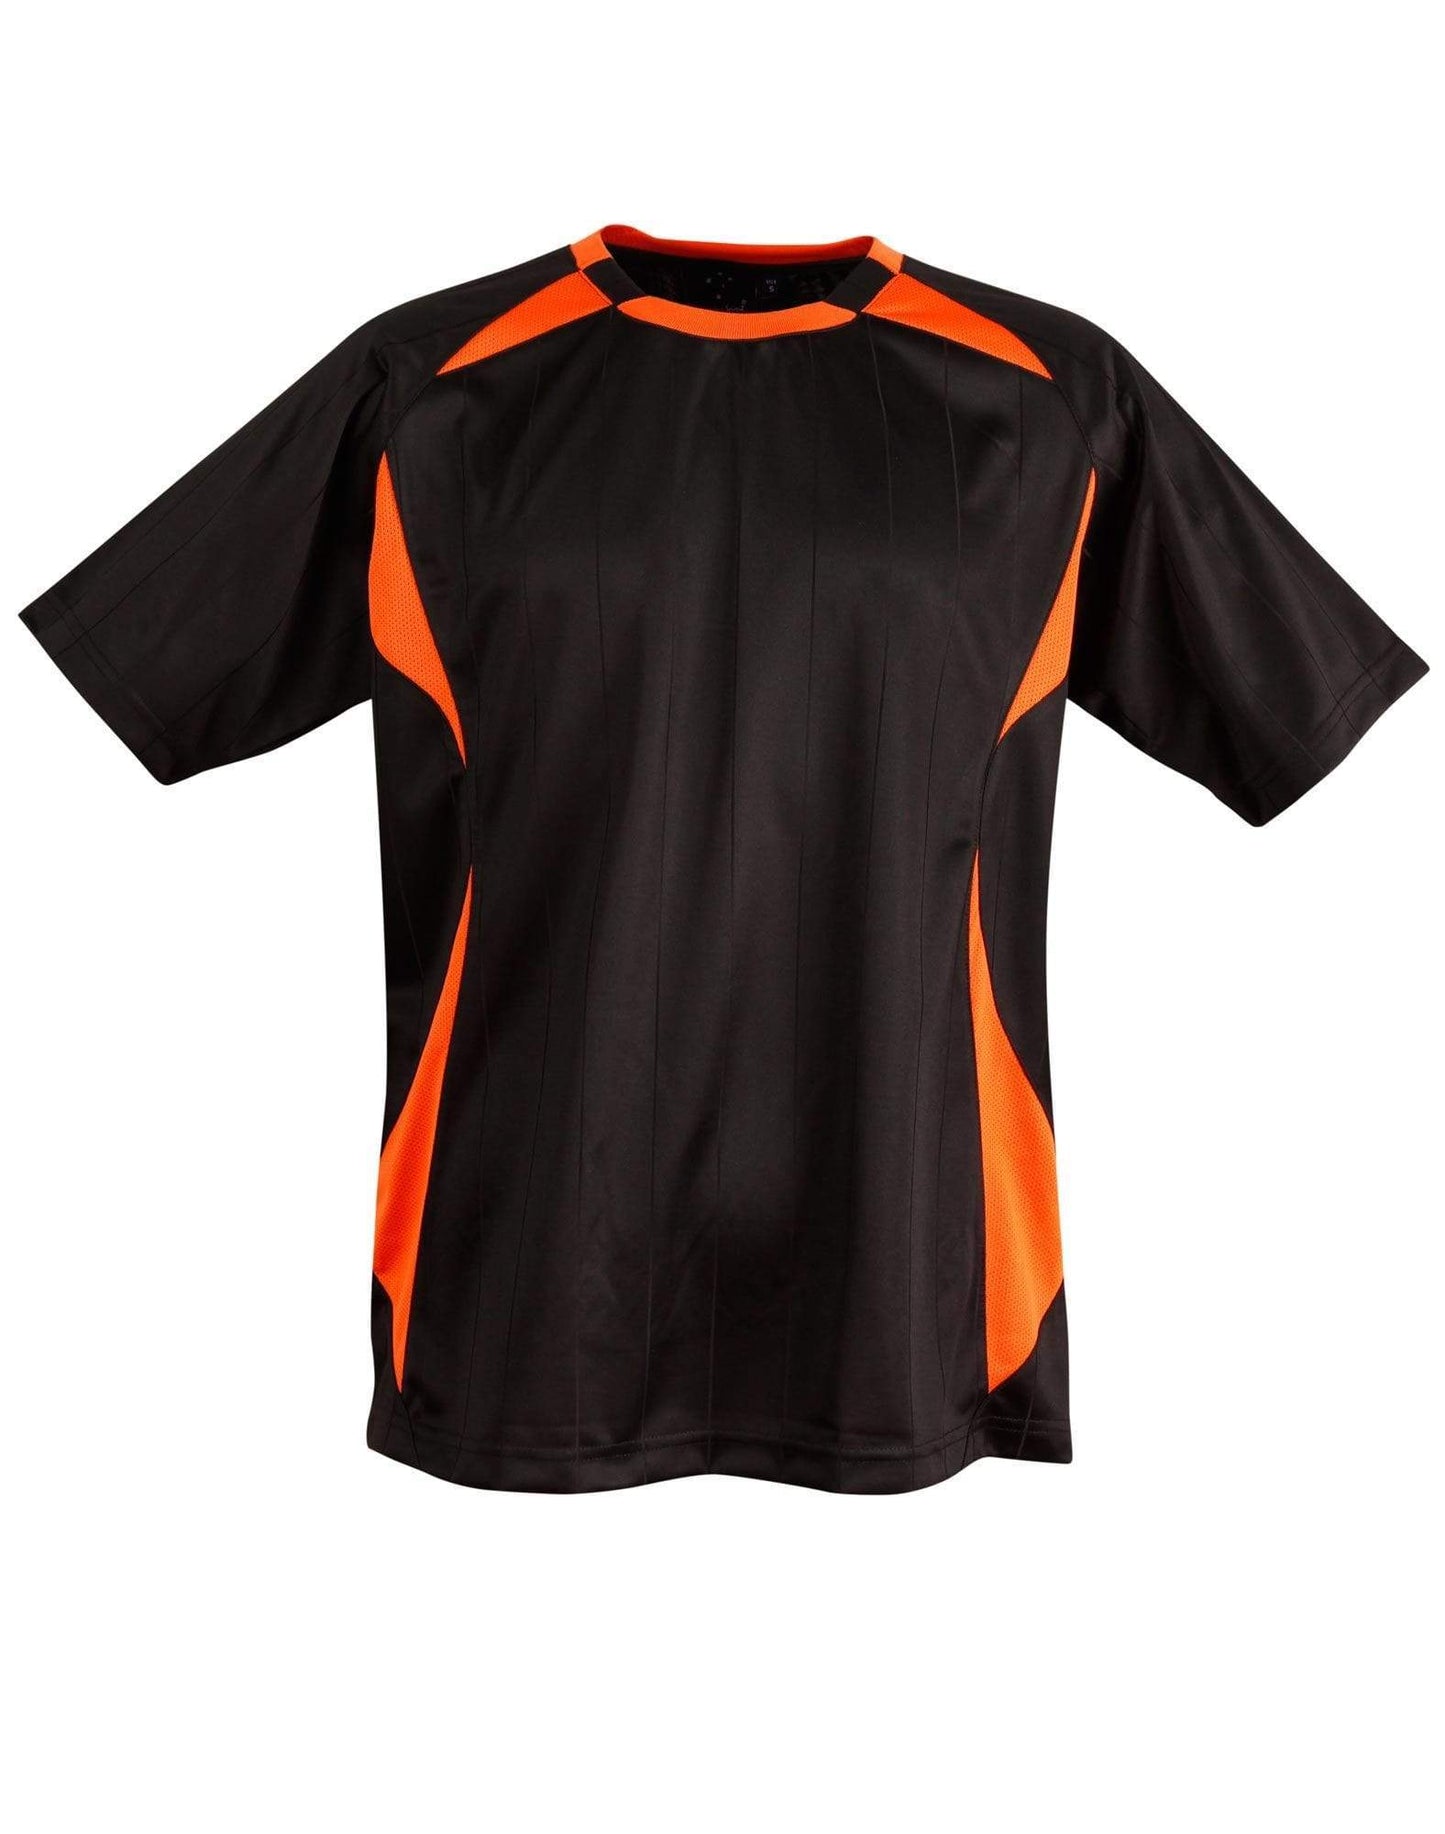 Shoot Soccer Tee Adult Ts85 Casual Wear Winning Spirit Black/Orange S 